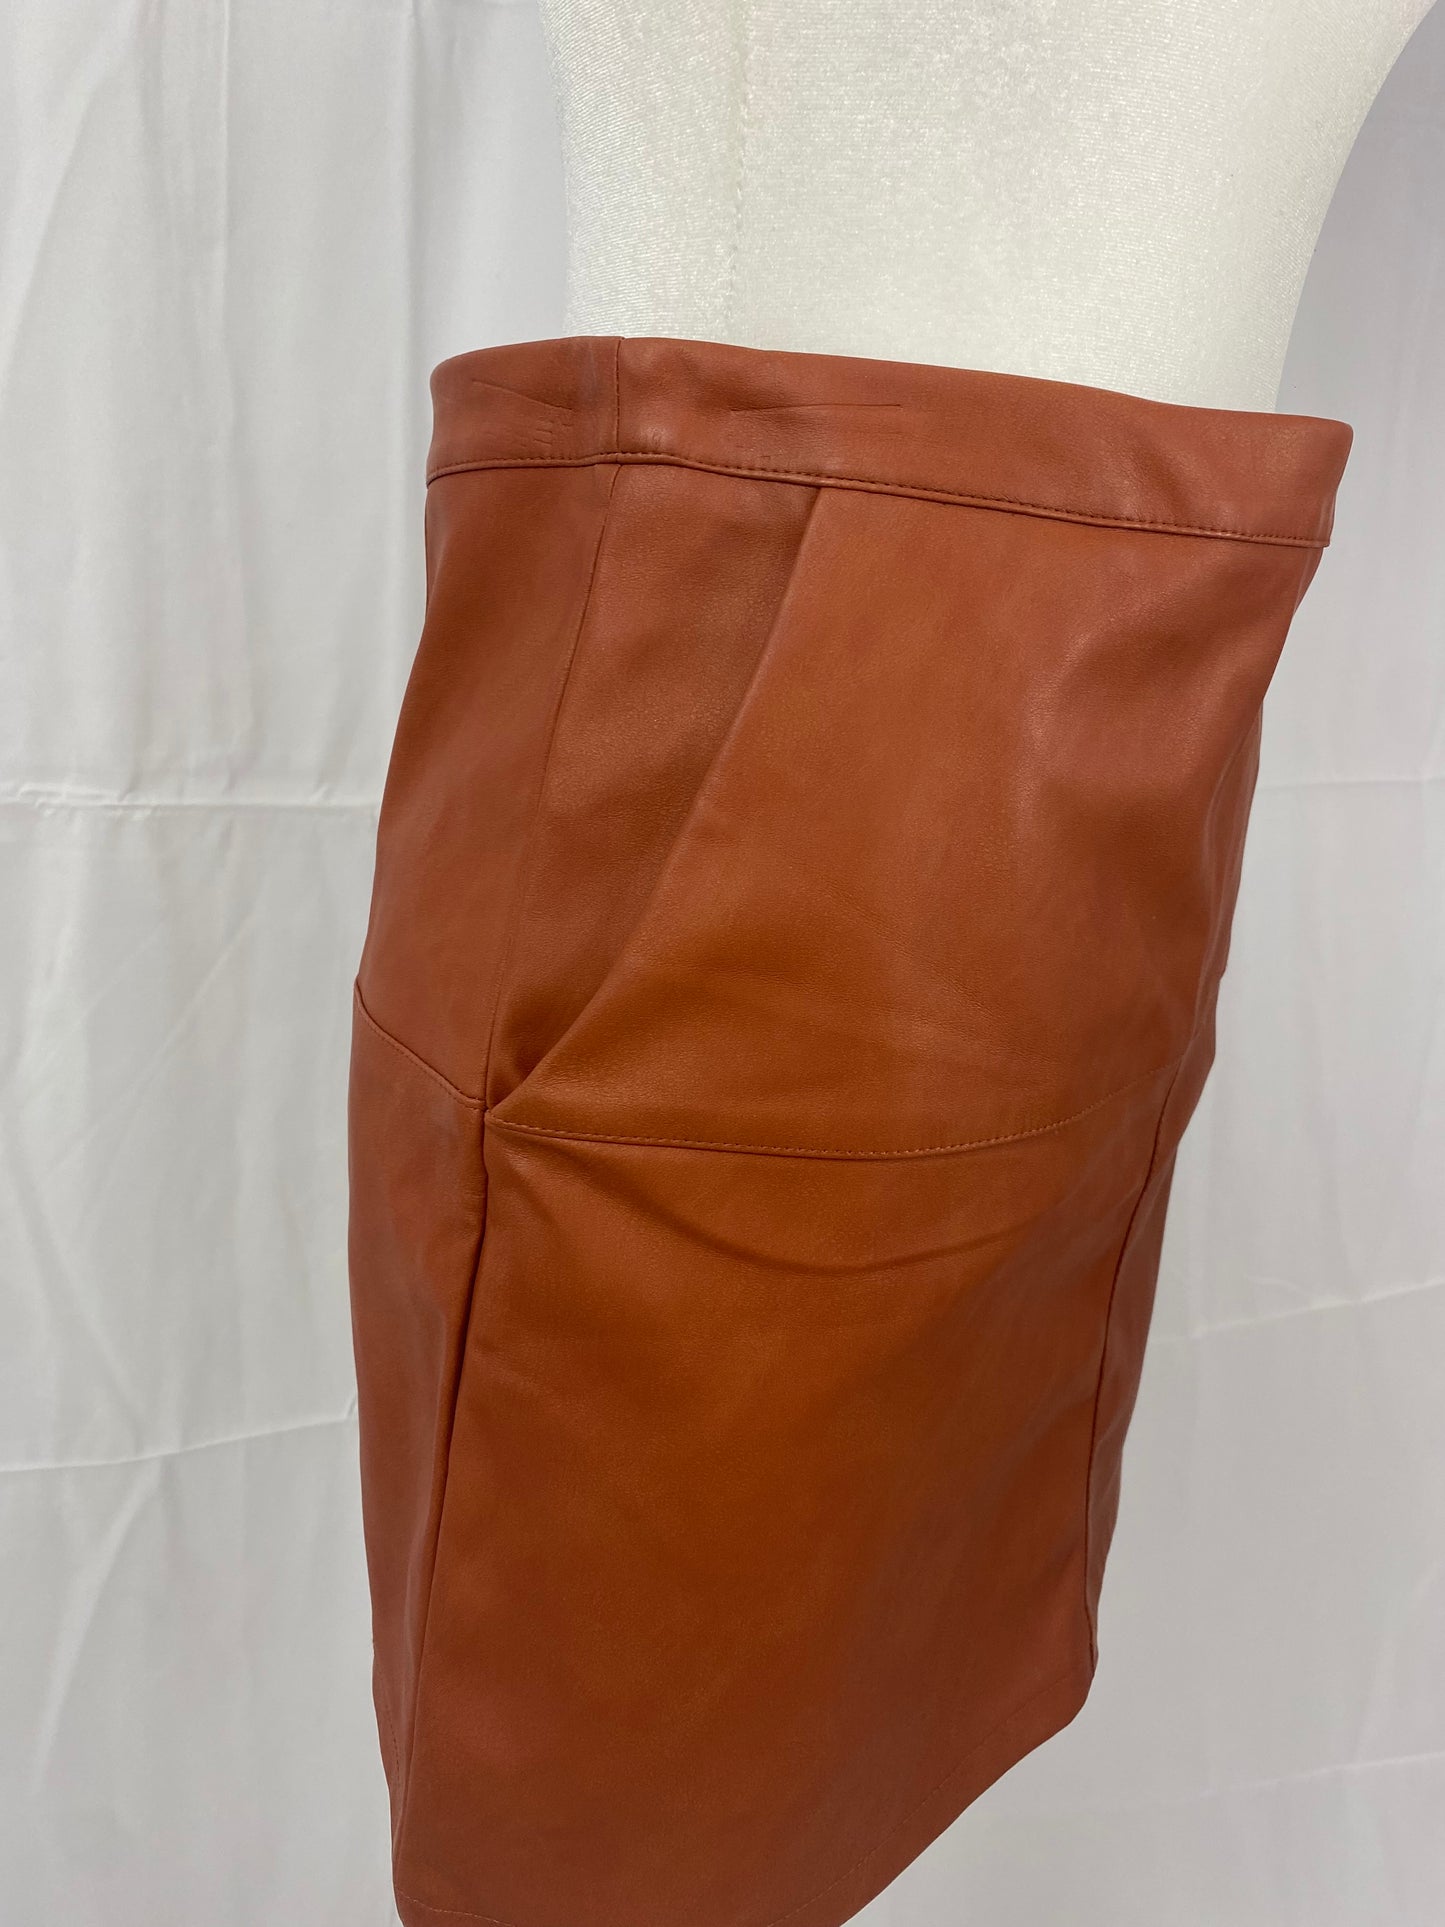 Brown pleather skirt w/ pockets